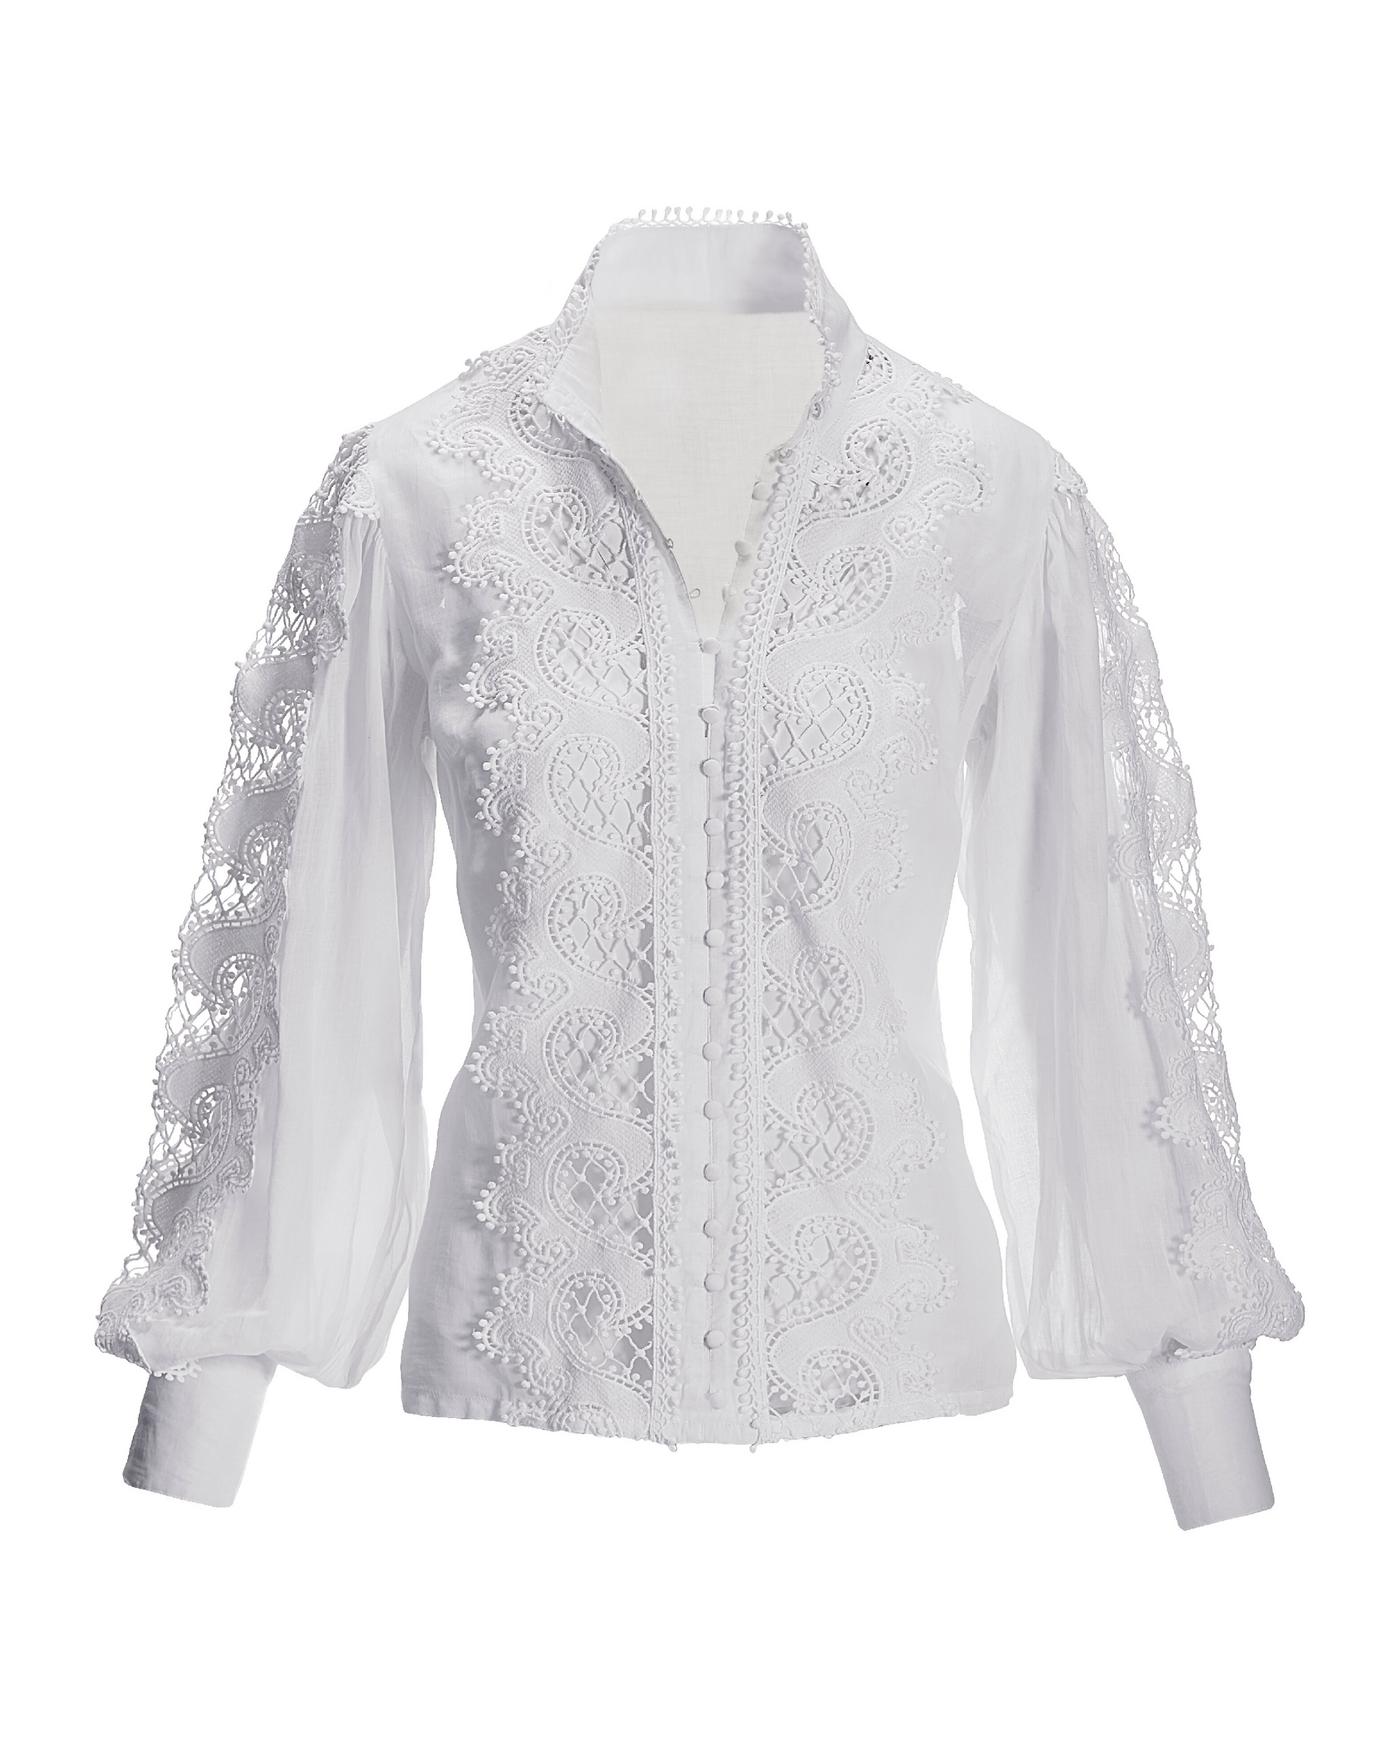 Sleeve Drama Lace Boston - White Inset | Proper Shirt